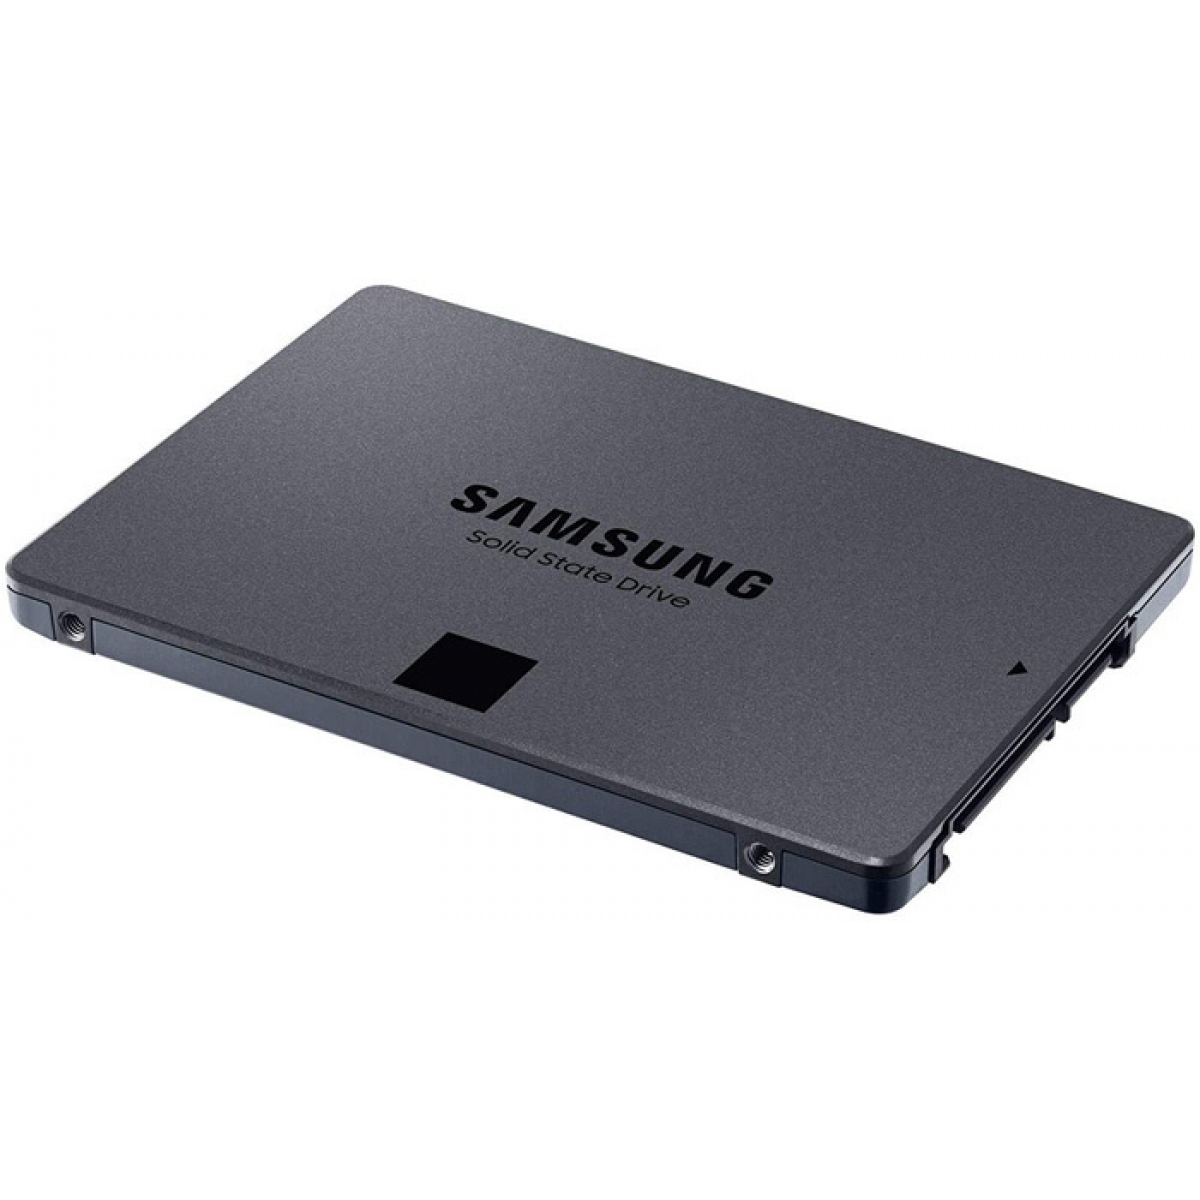 SSD Samsung 860 QVO, 2TB, Sata III, Leitura 550MBs e Gravação 520MBs, MZ-76Q2T0B-AM